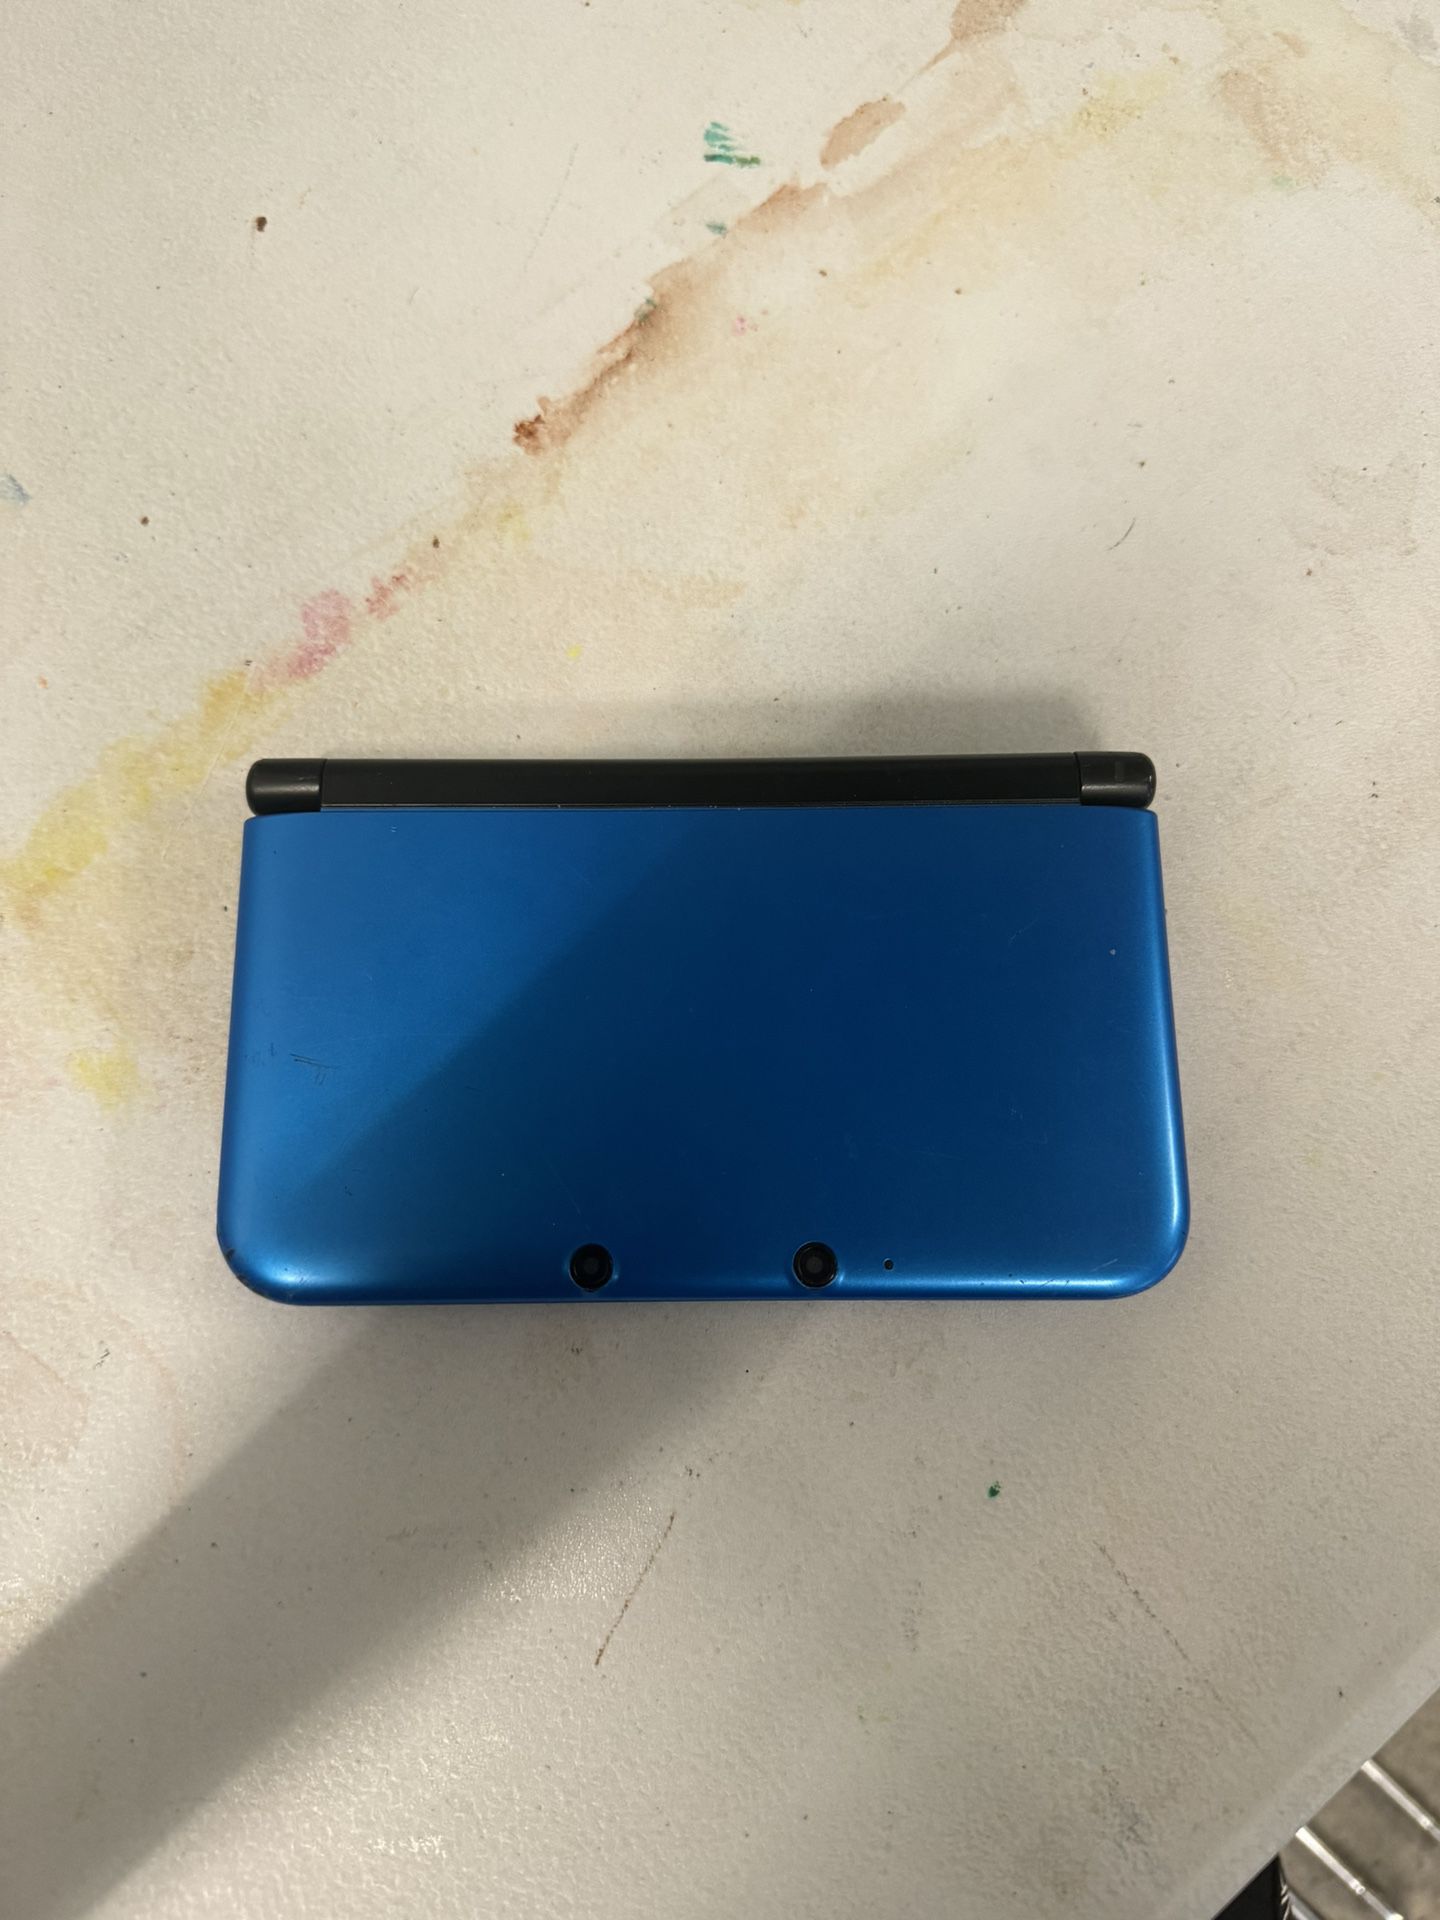 Blue Nintendo 3ds XL